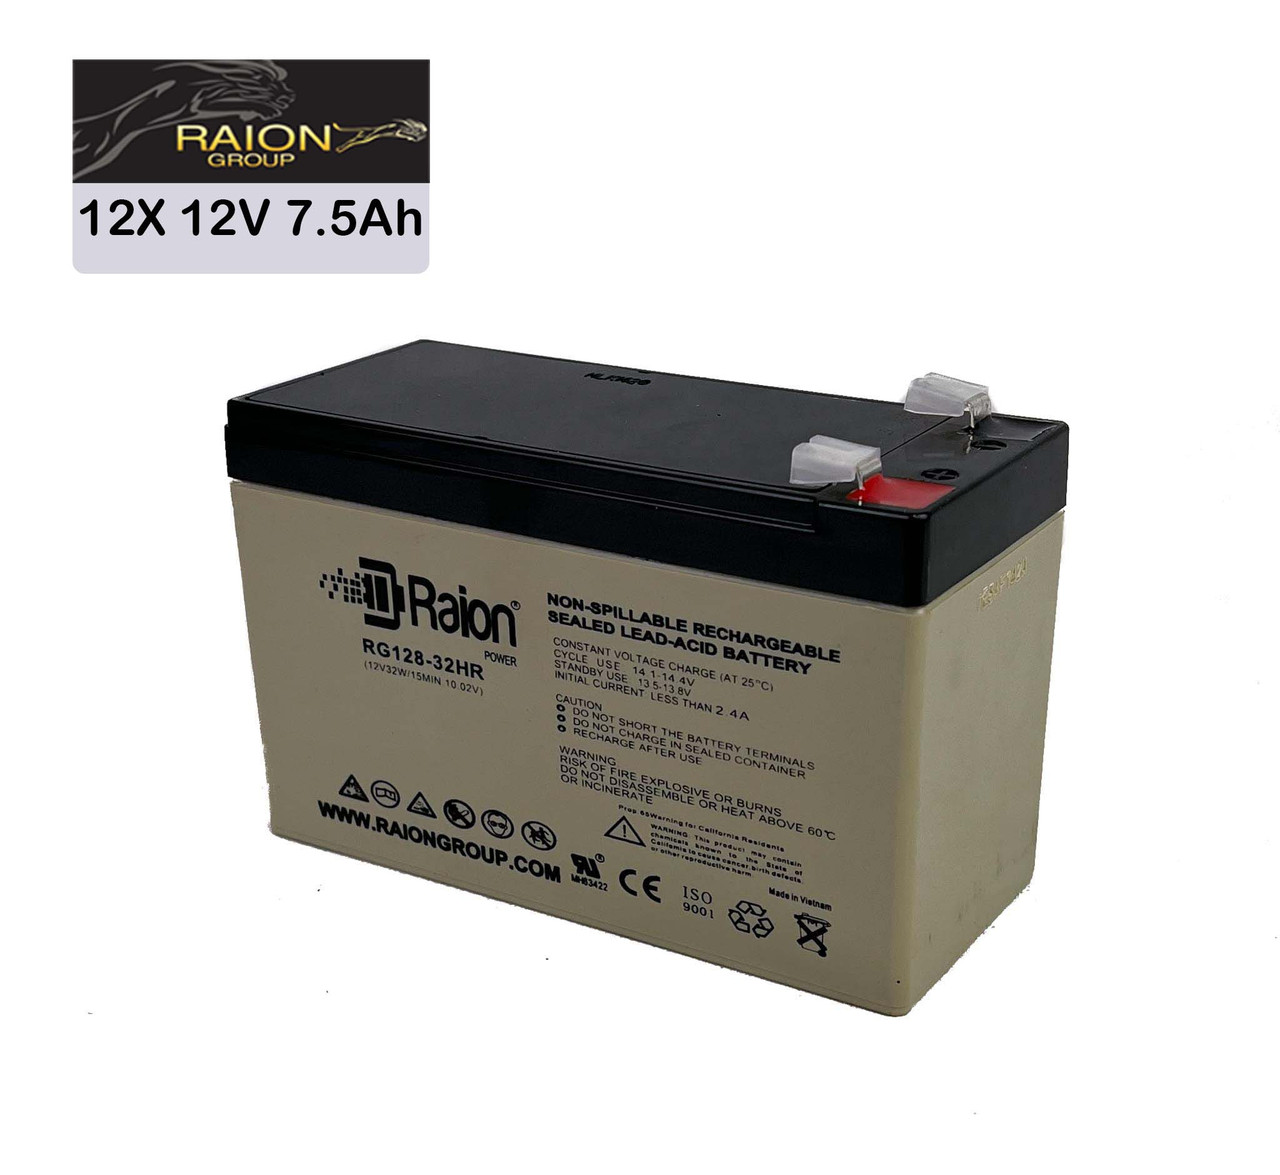 Raion Power 12V 7.5Ah High Rate Discharge UPS Batteries for Alpha Technologies ALIBP1500RM (033-747-12) - 12 Pack